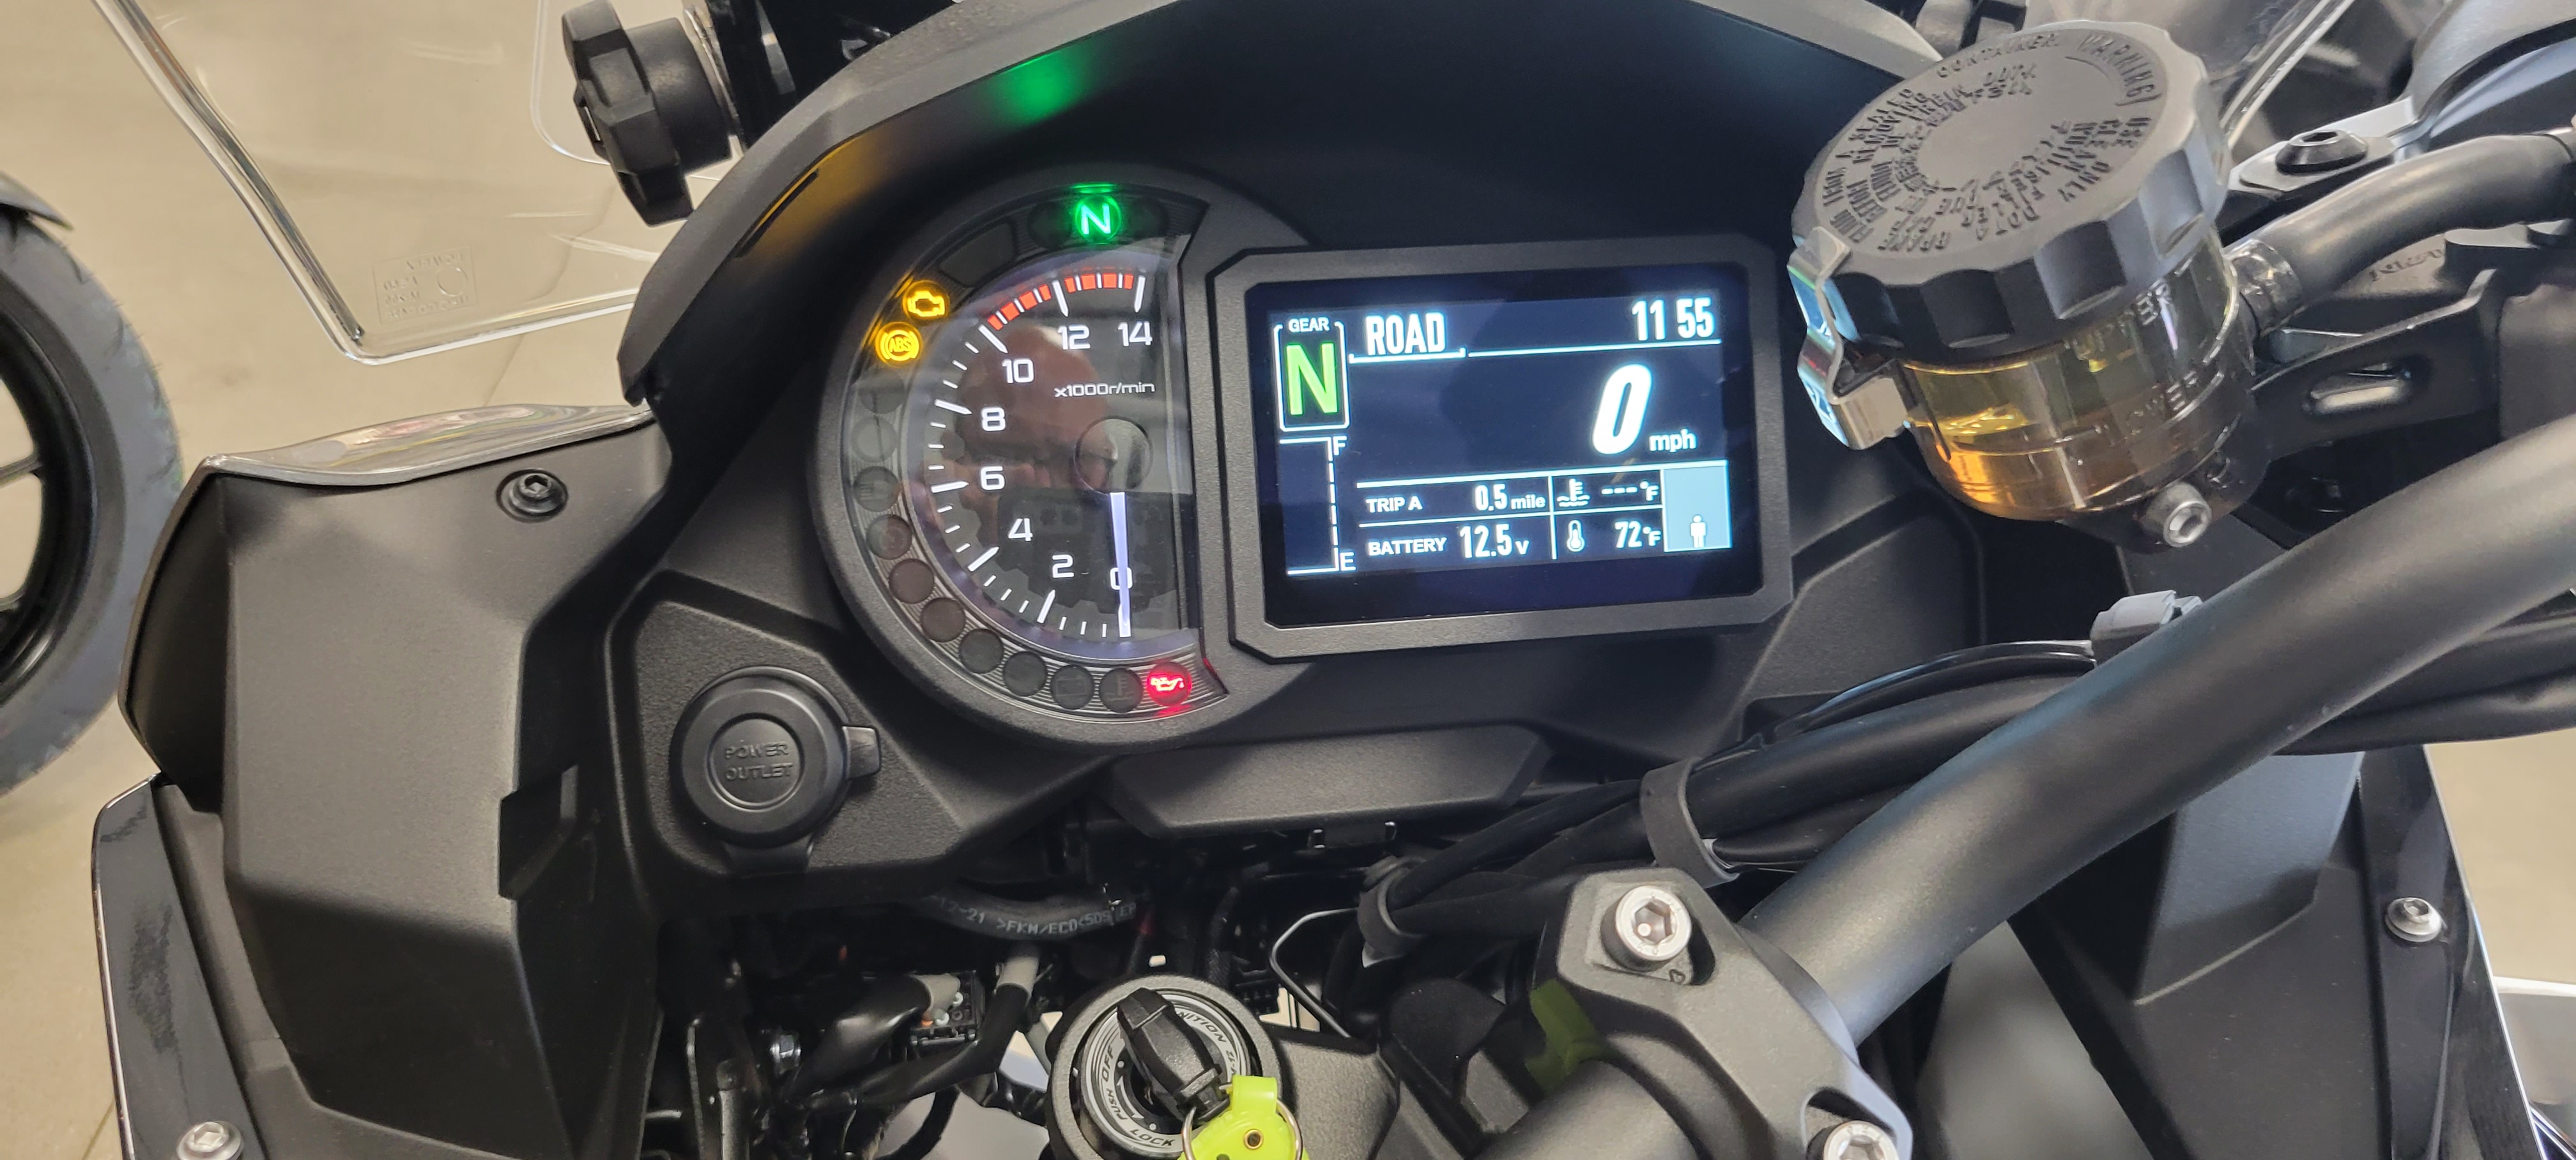 2022 Kawasaki Versys 1000 SE LT+ at Brenny's Motorcycle Clinic, Bettendorf, IA 52722